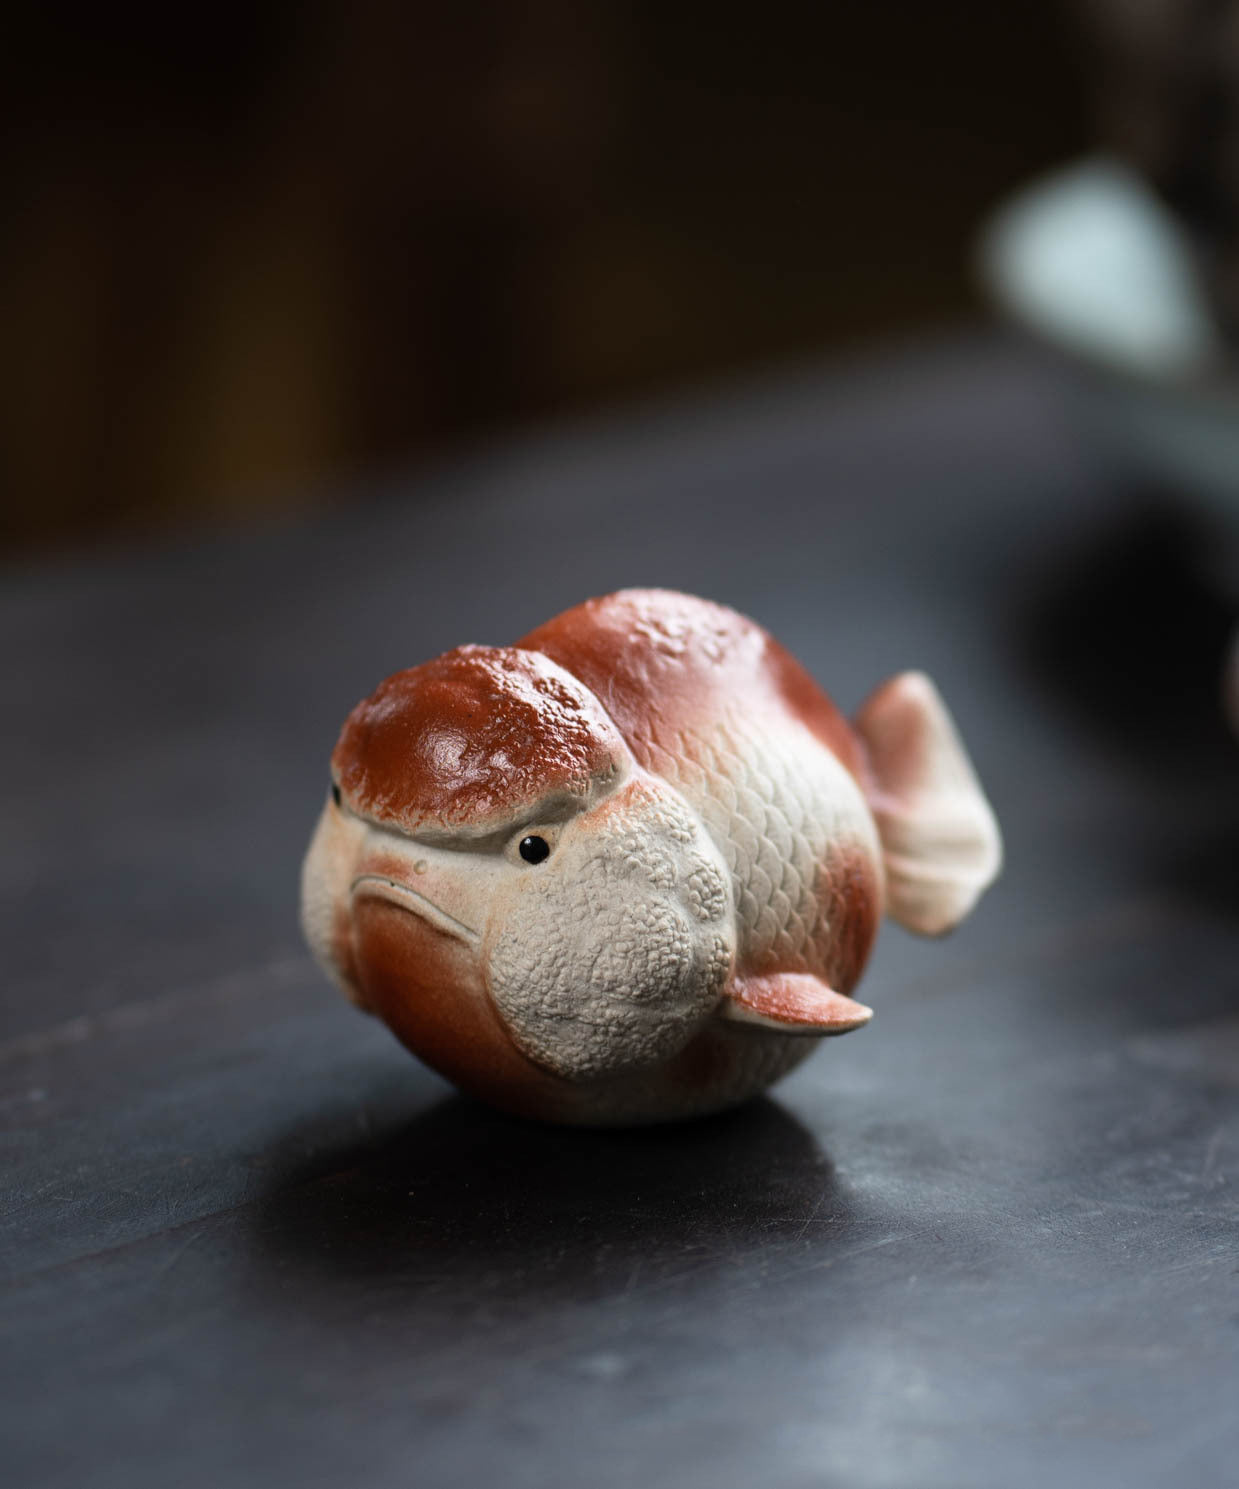 IwaiLoft 金魚の置物 宜興紫砂 陶器 茶寵 手作り オブジェ かわいい 縁起物 工芸品 民芸 風水グッズ 風水アイテム 彫像 陶磁器 –  茶器・コーヒー用品を選ぶ IwaiLoft